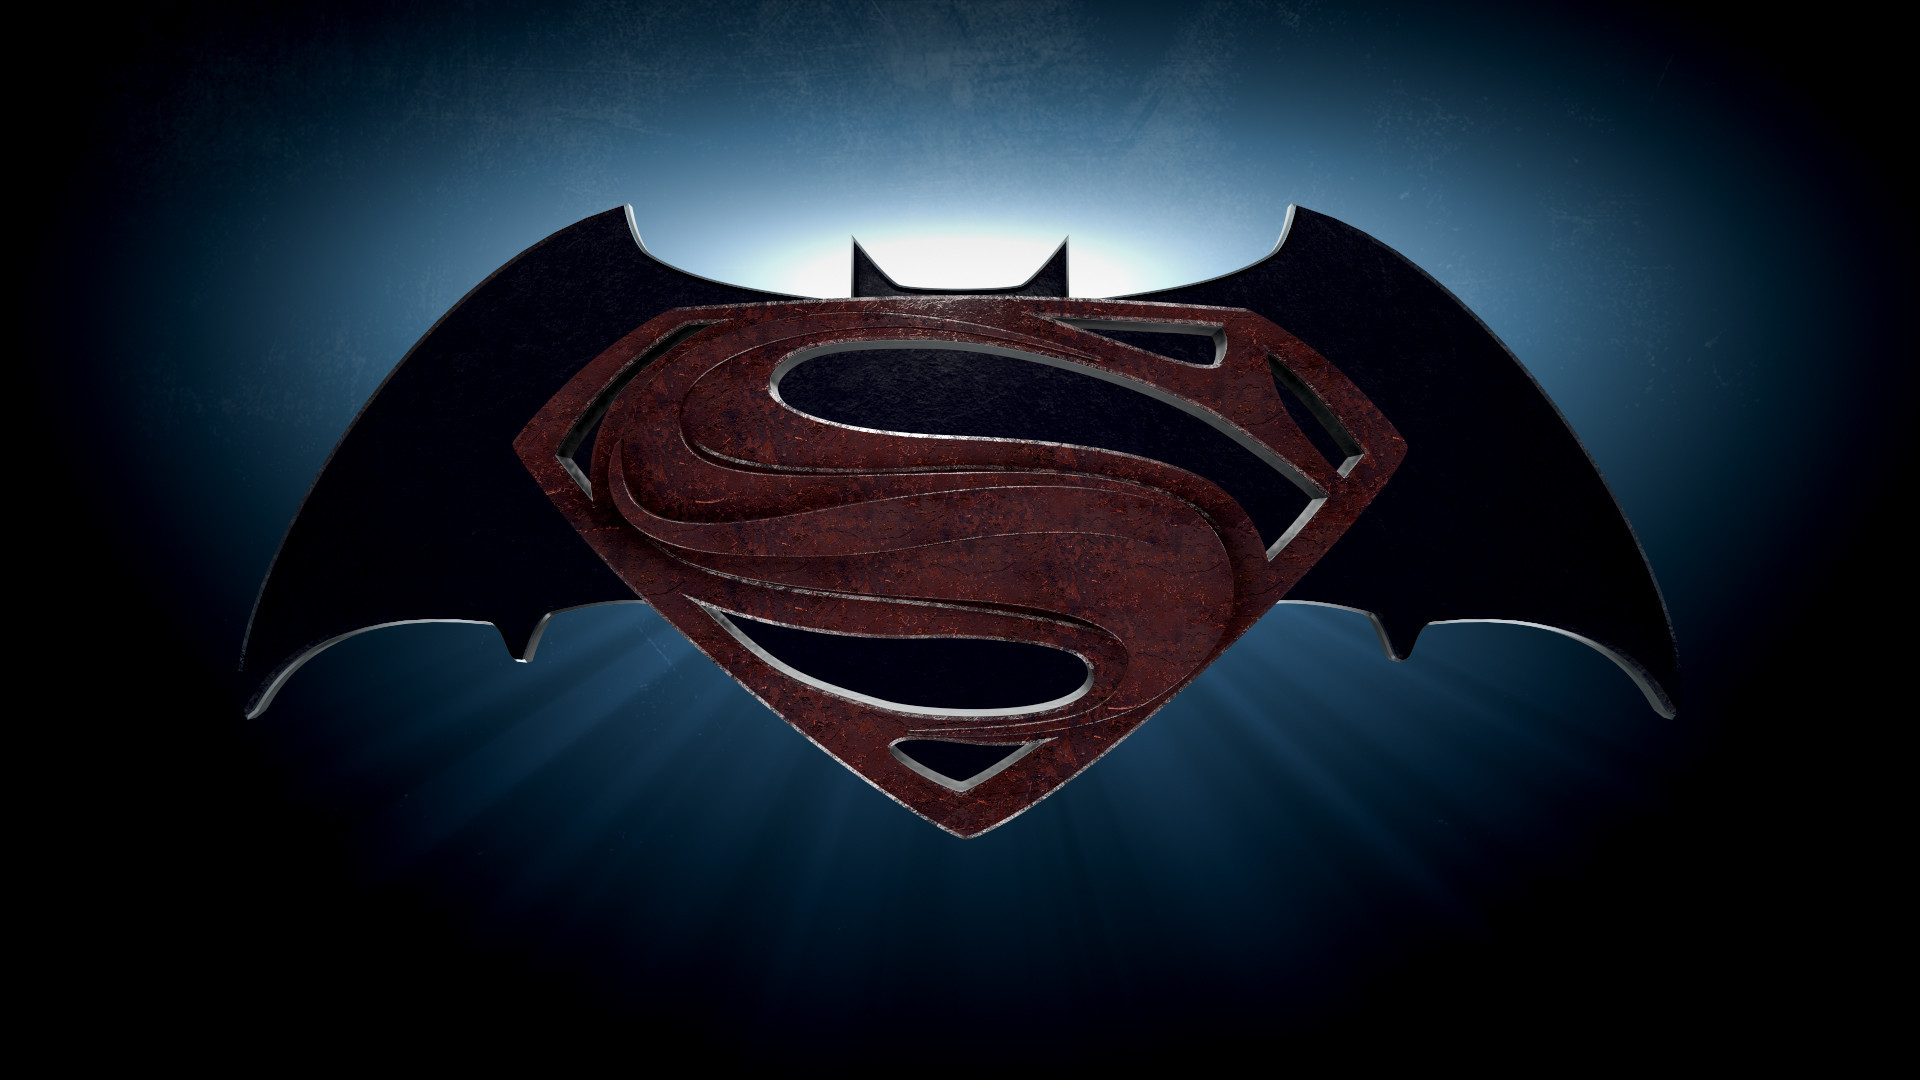 Movie wallpapers batman vs superman logo wallpaper 31507